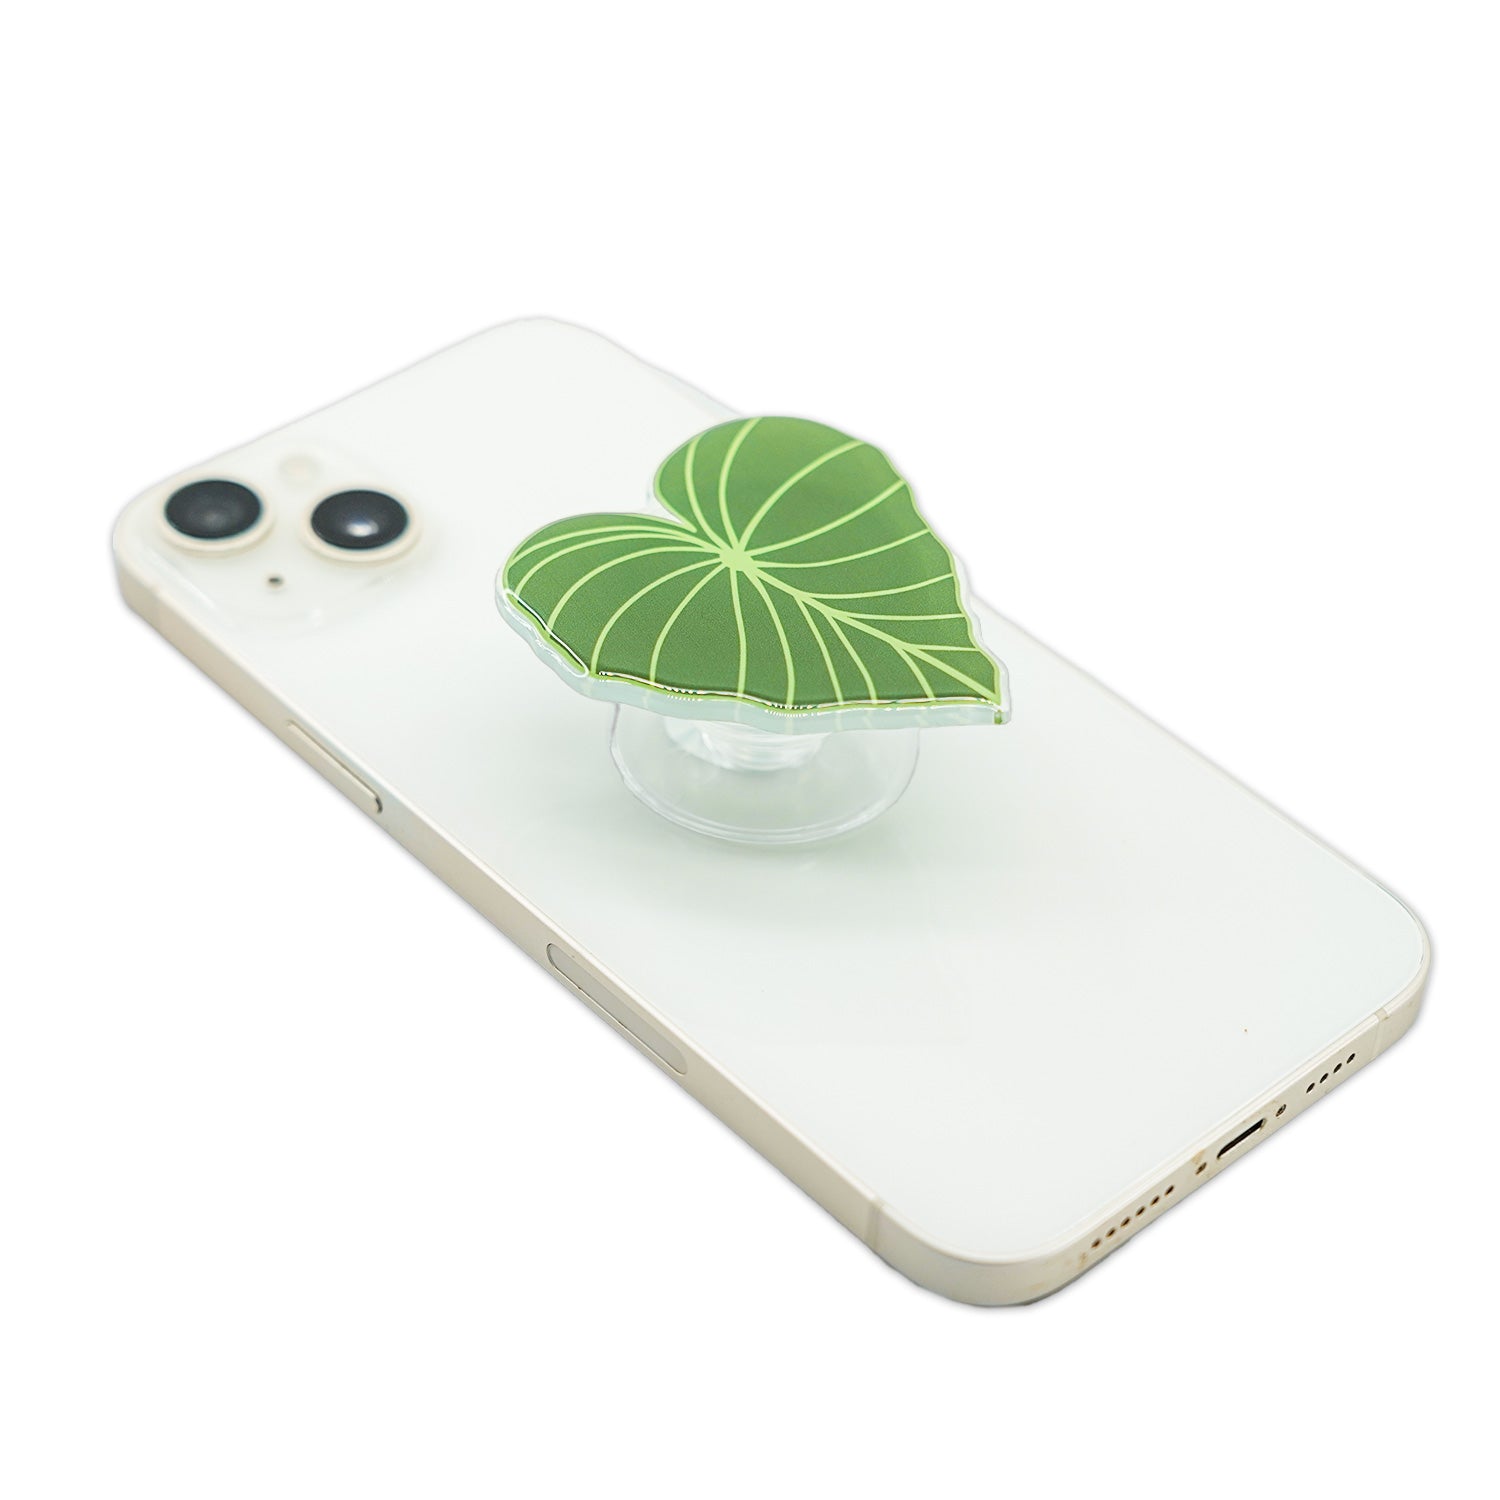 Taro Leaf Collapsible Phone Grip